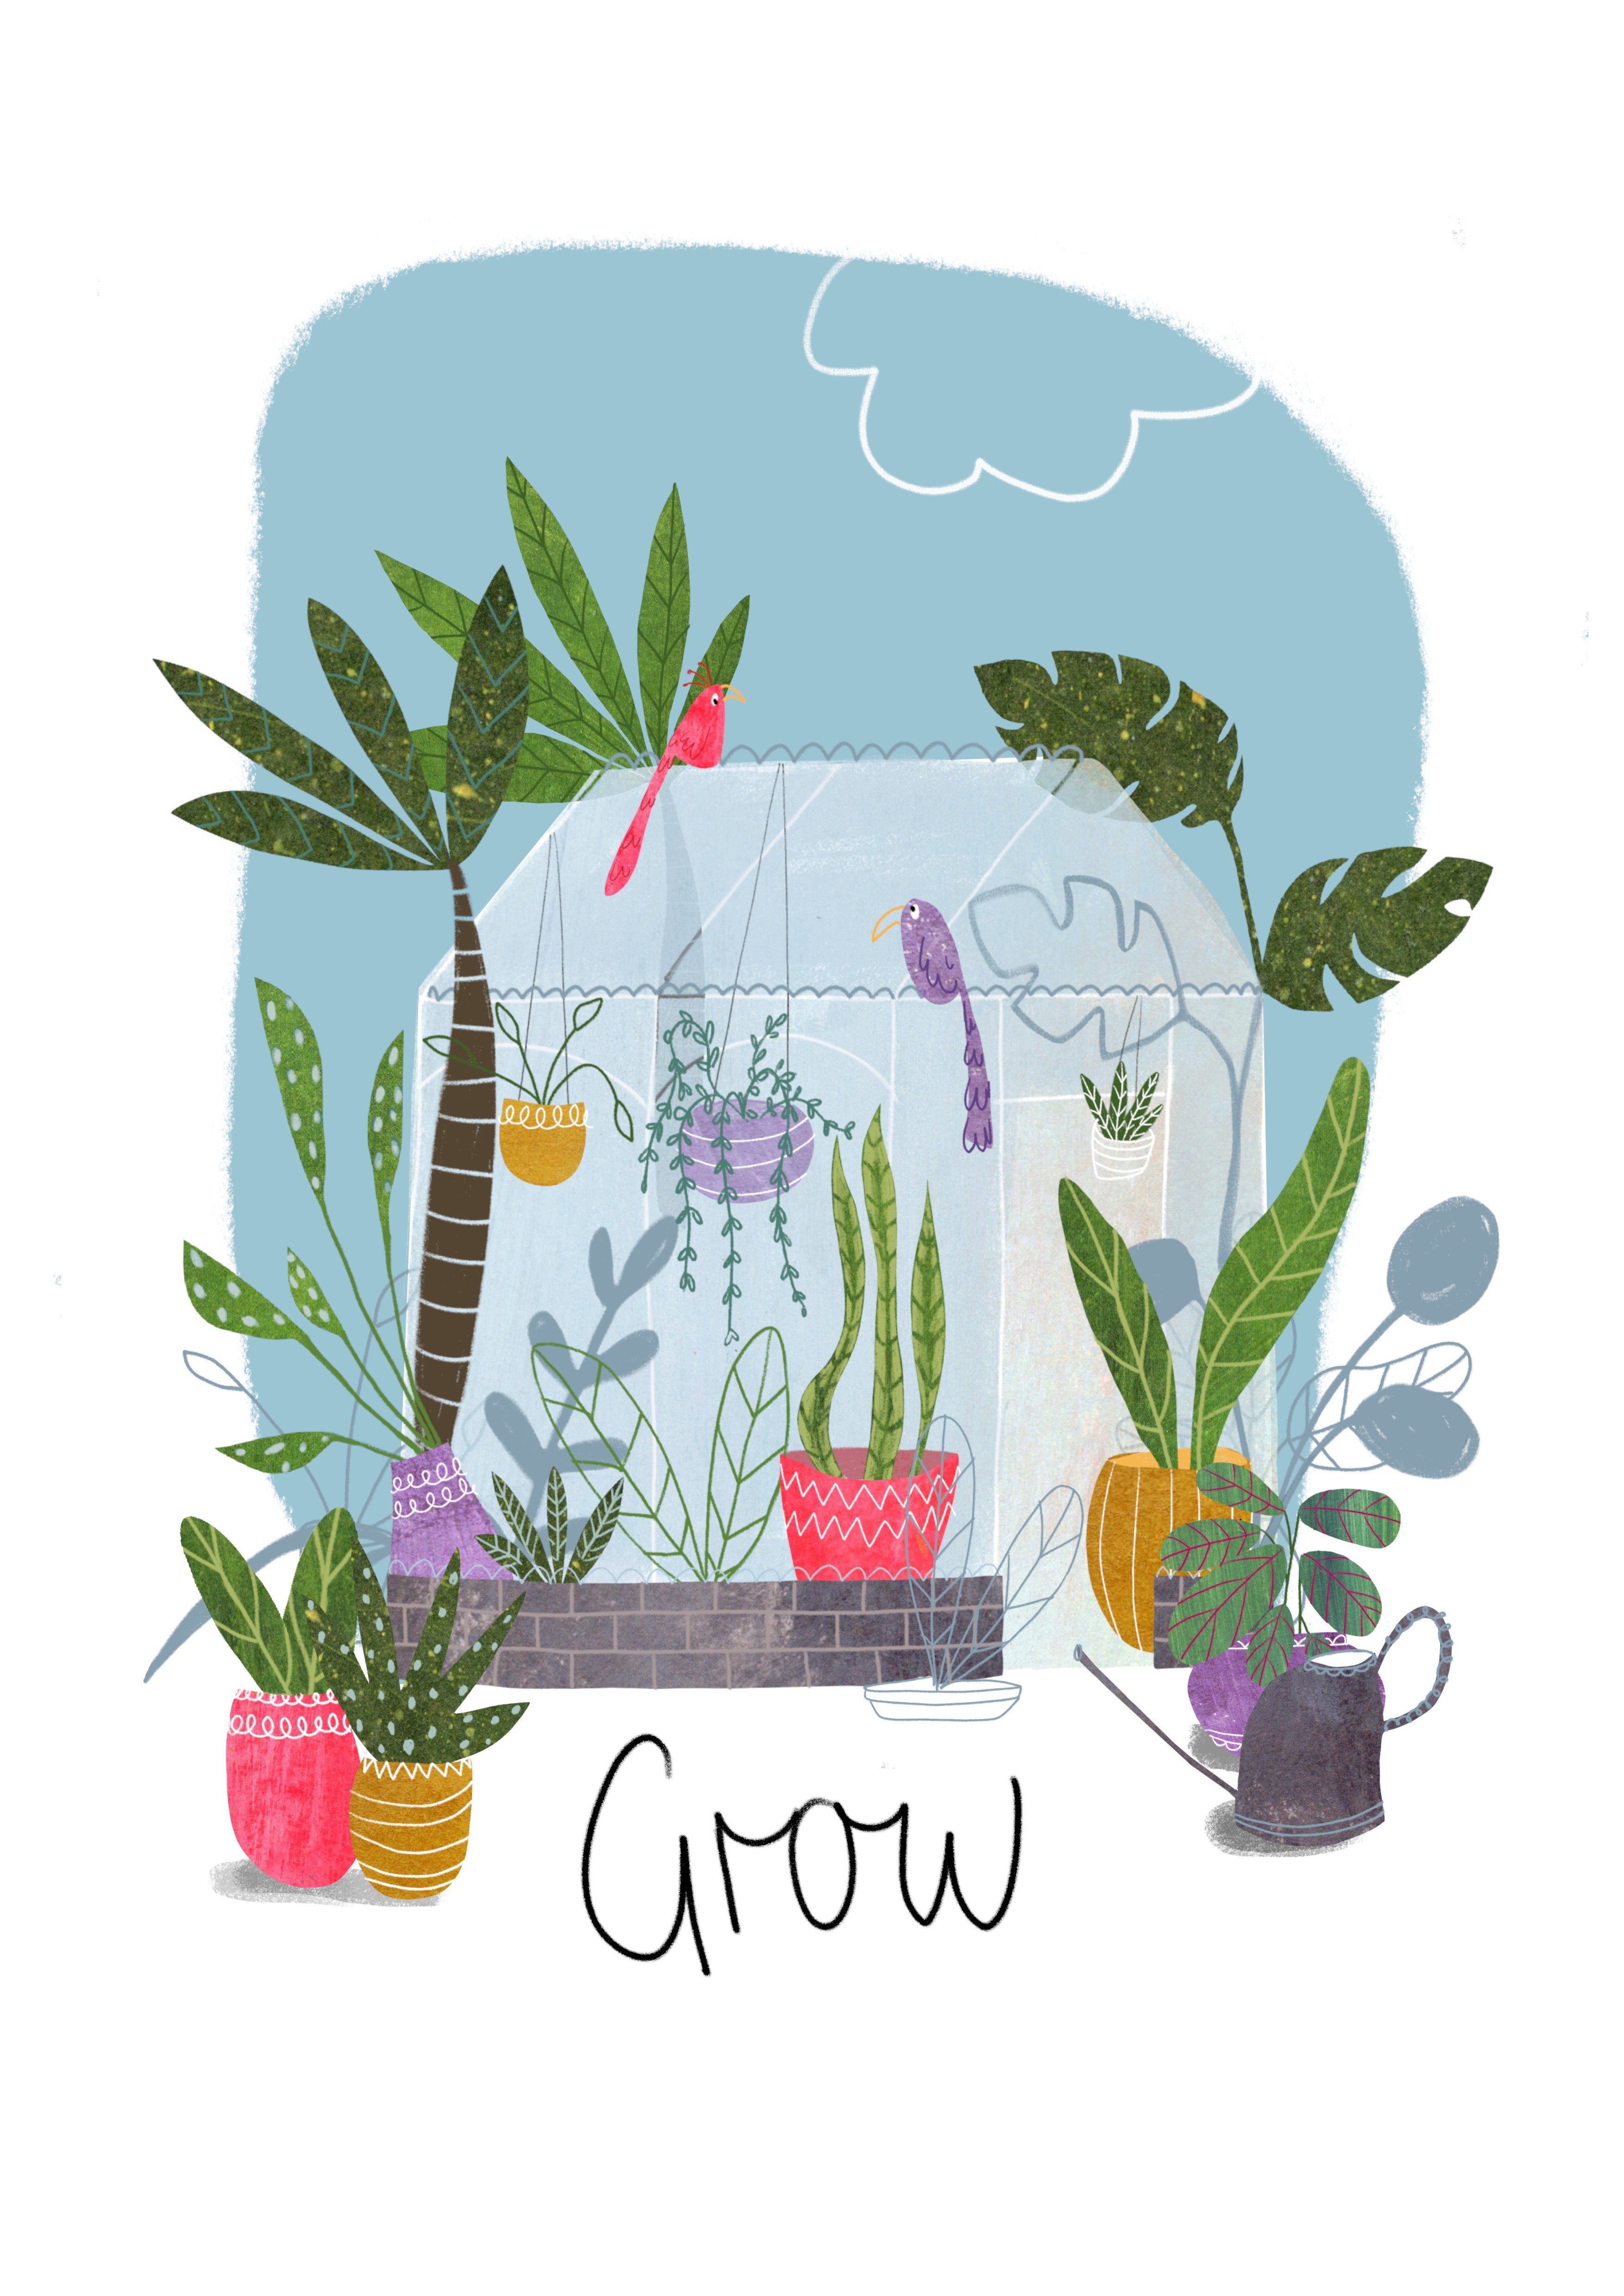 A3 Greenhouse Grow Print